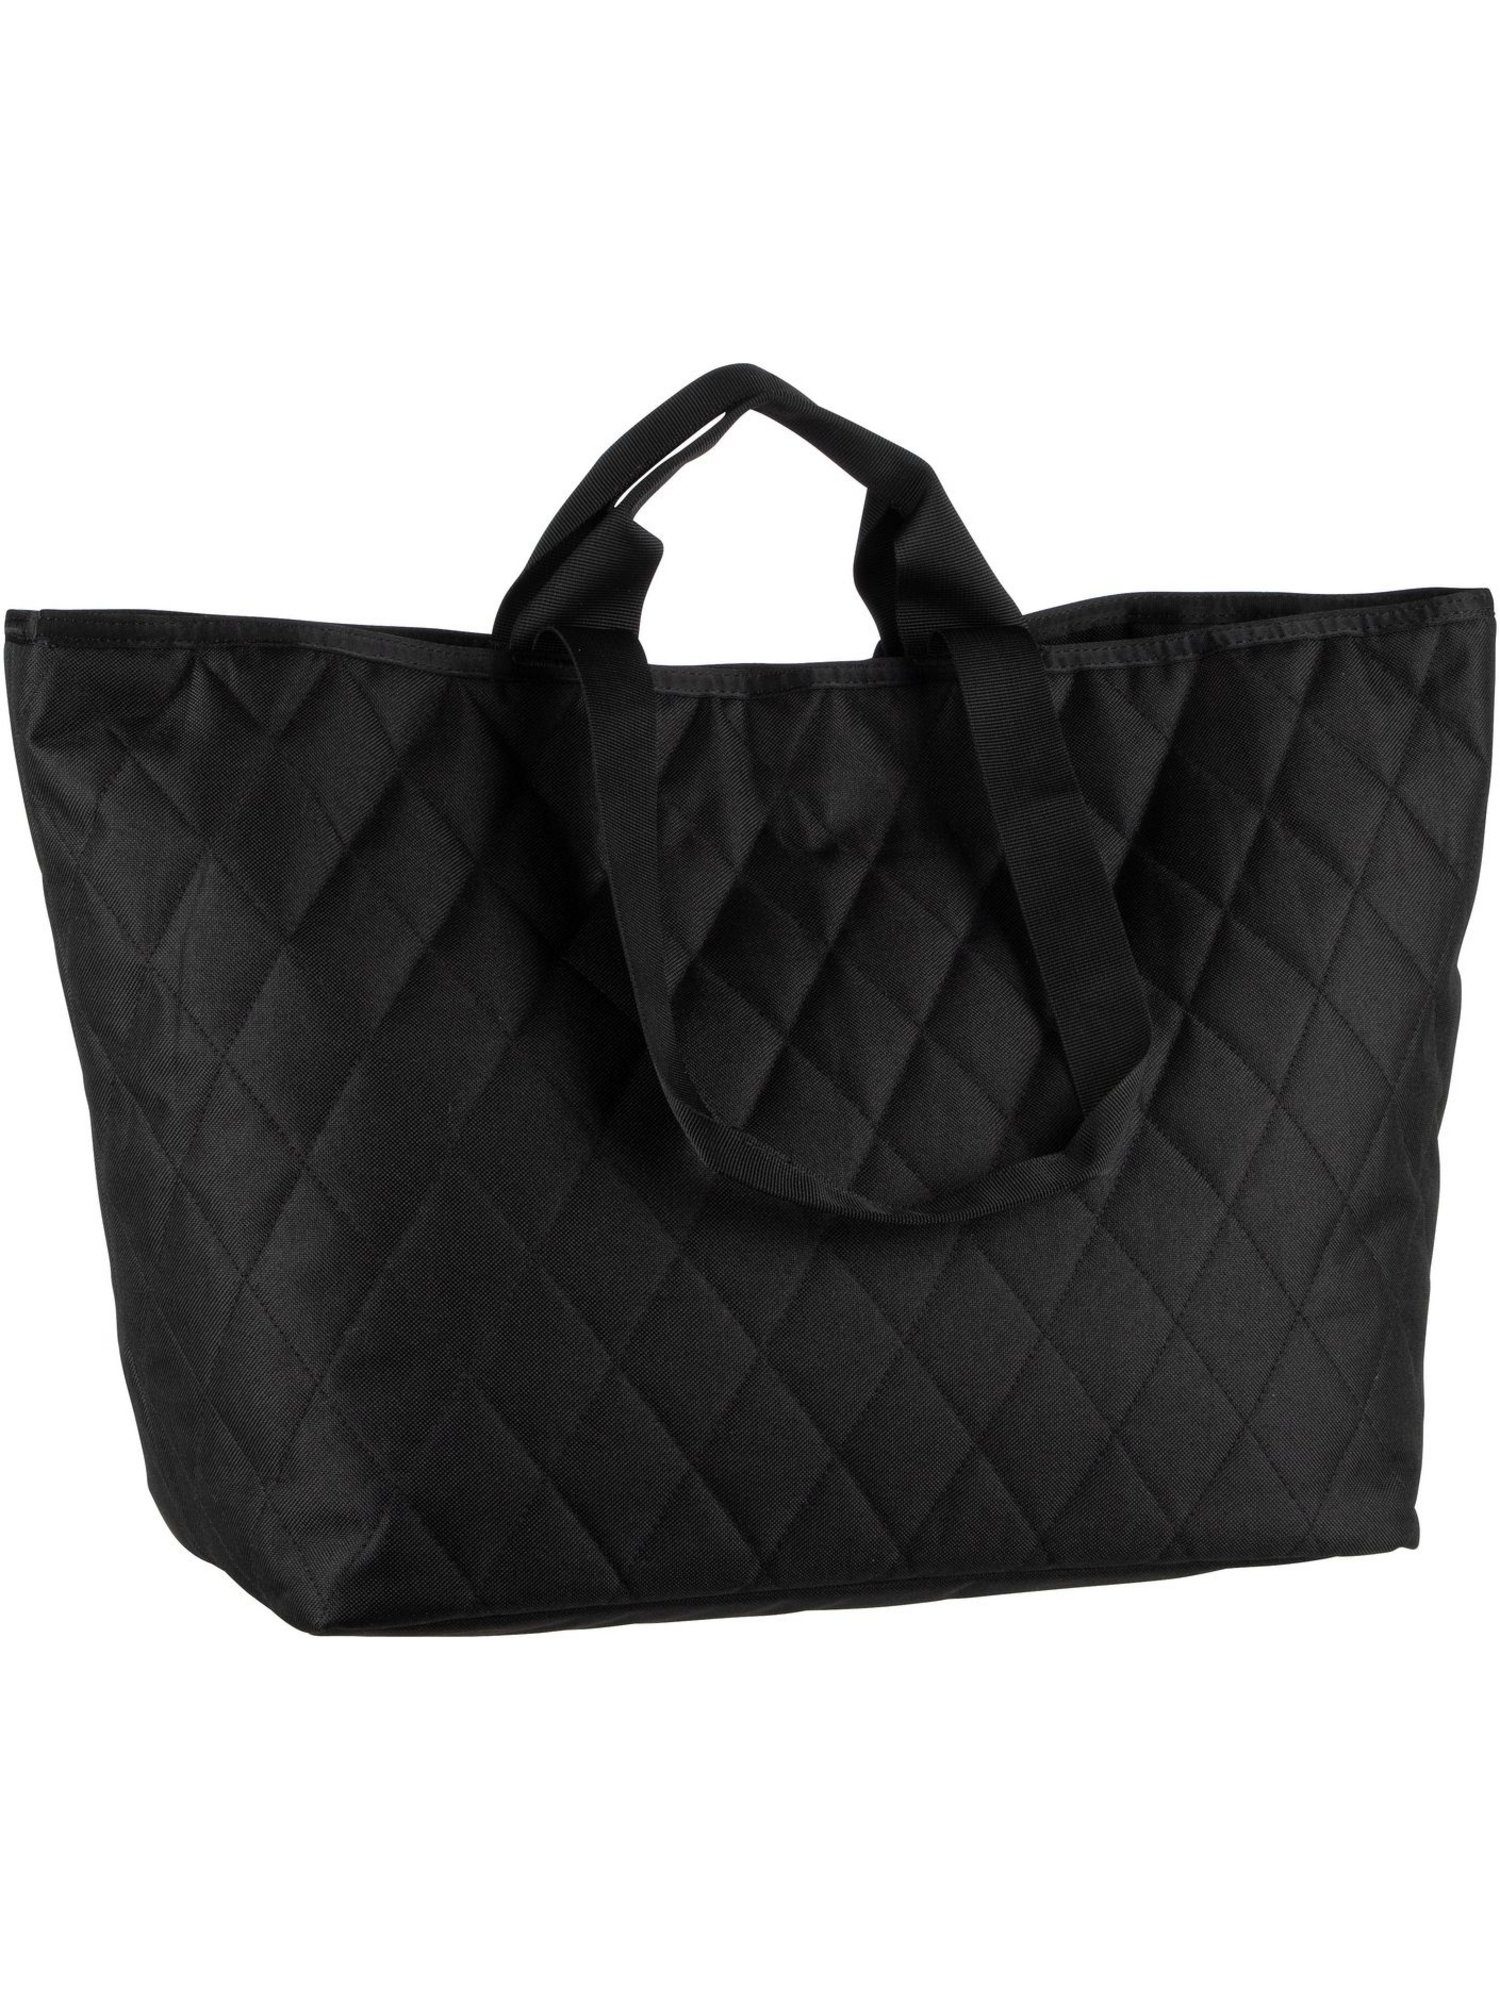 REISENTHEL® Shopper classic shopper XL Black Rhombus